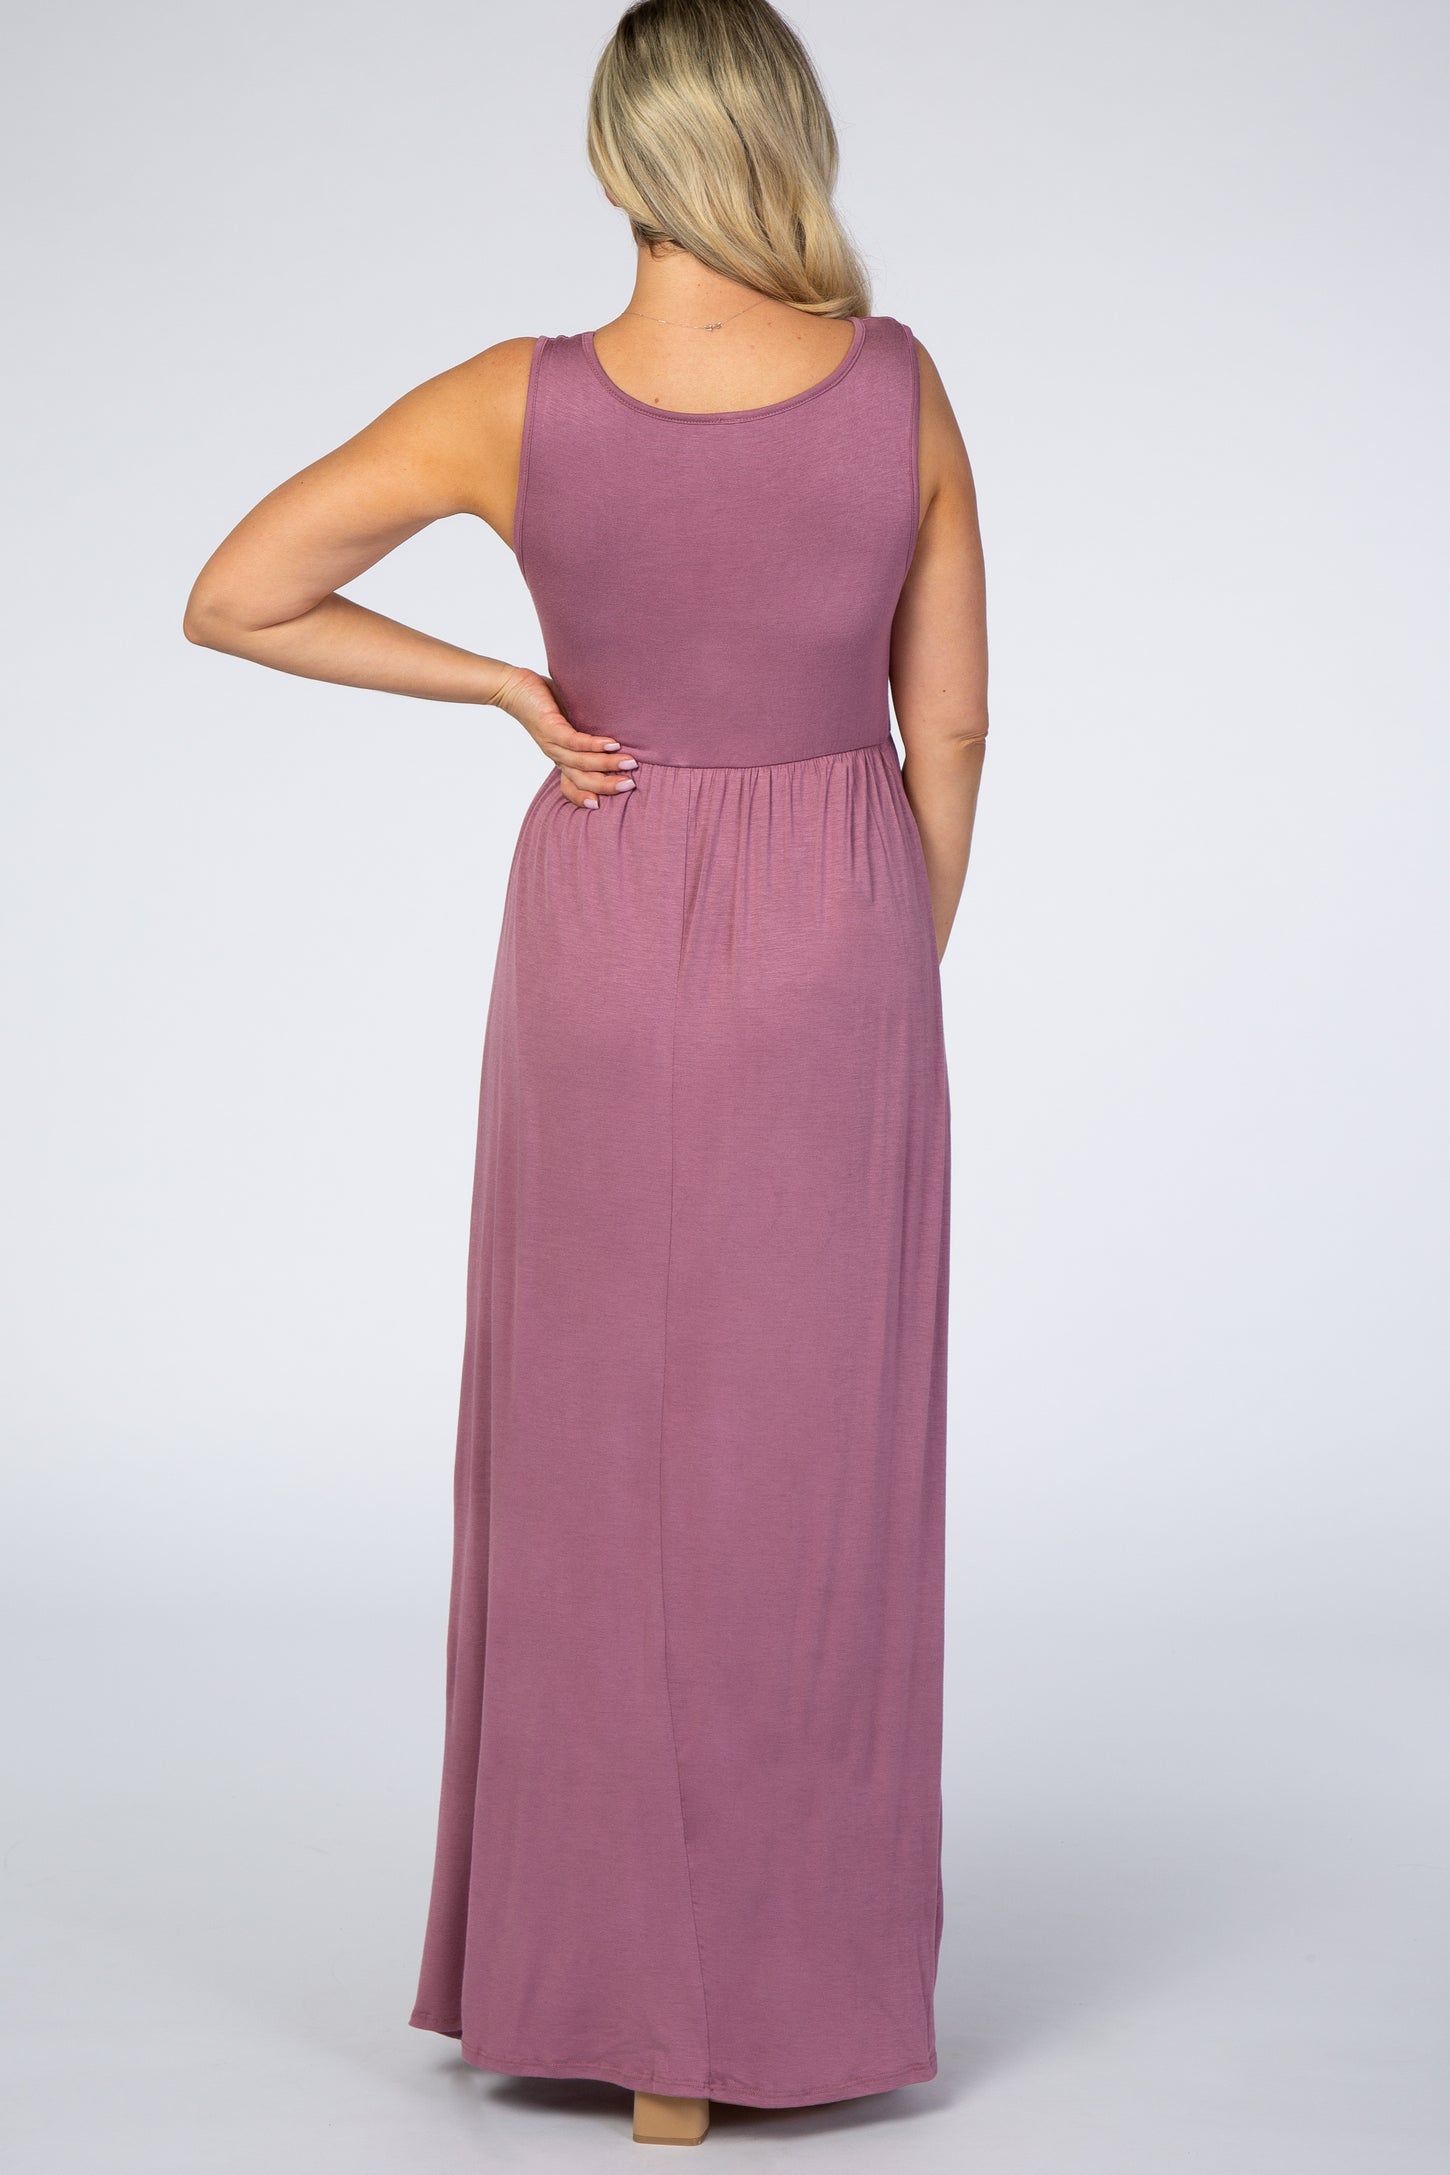 PinkBlush Mauve Basic Sleeveless Maternity Maxi Dress